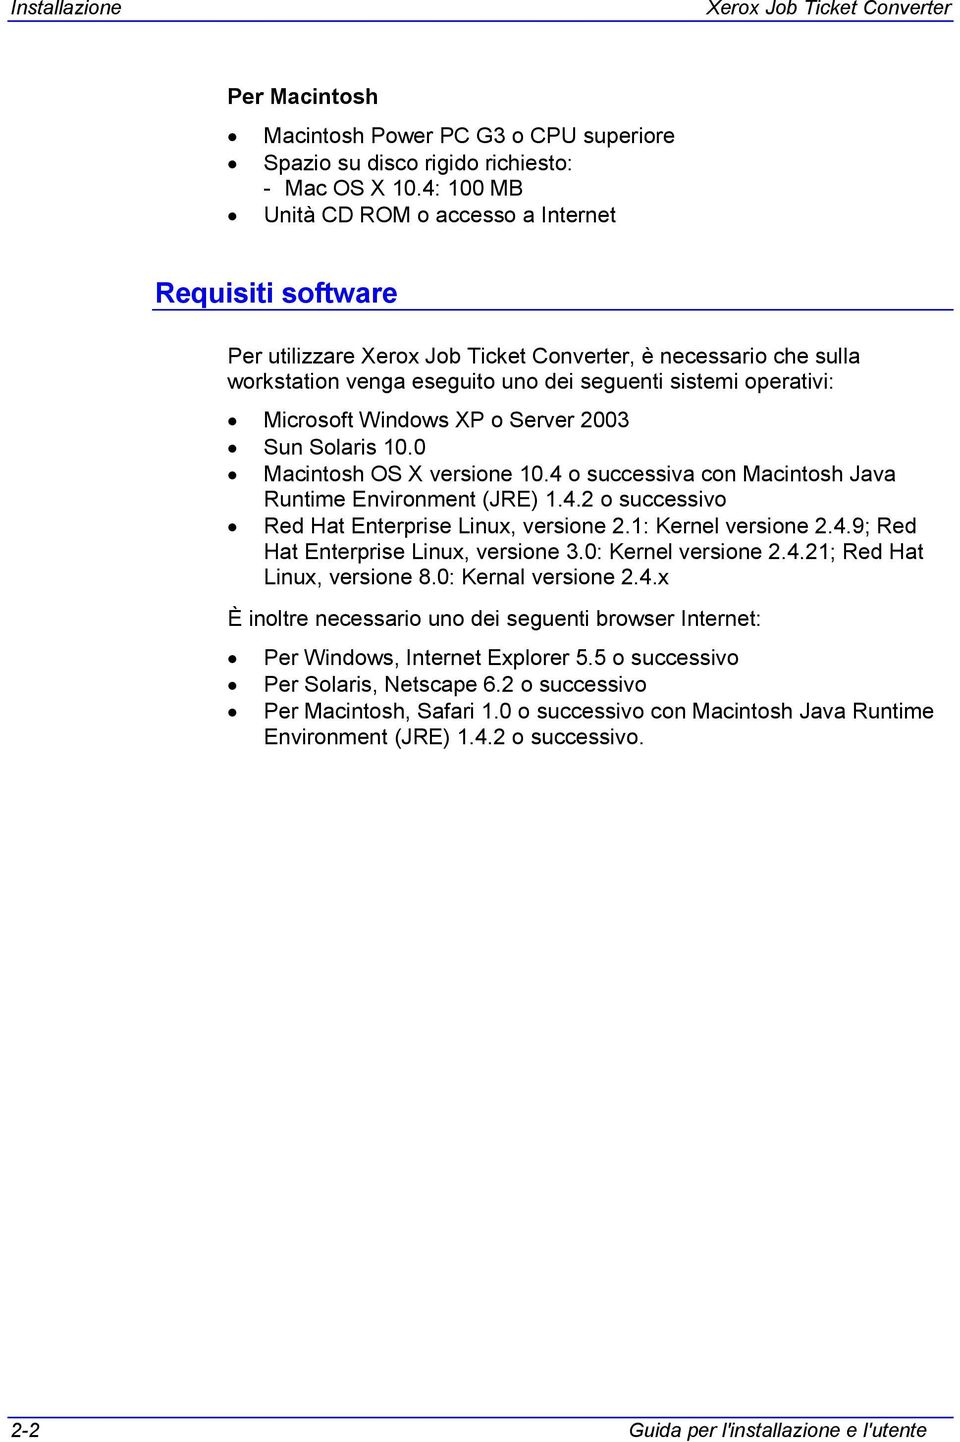 Microsoft Windows XP o Server 2003 Sun Solaris 10.0 Macintosh OS X versione 10.4 o successiva con Macintosh Java Runtime Environment (JRE) 1.4.2 o successivo Red Hat Enterprise Linux, versione 2.